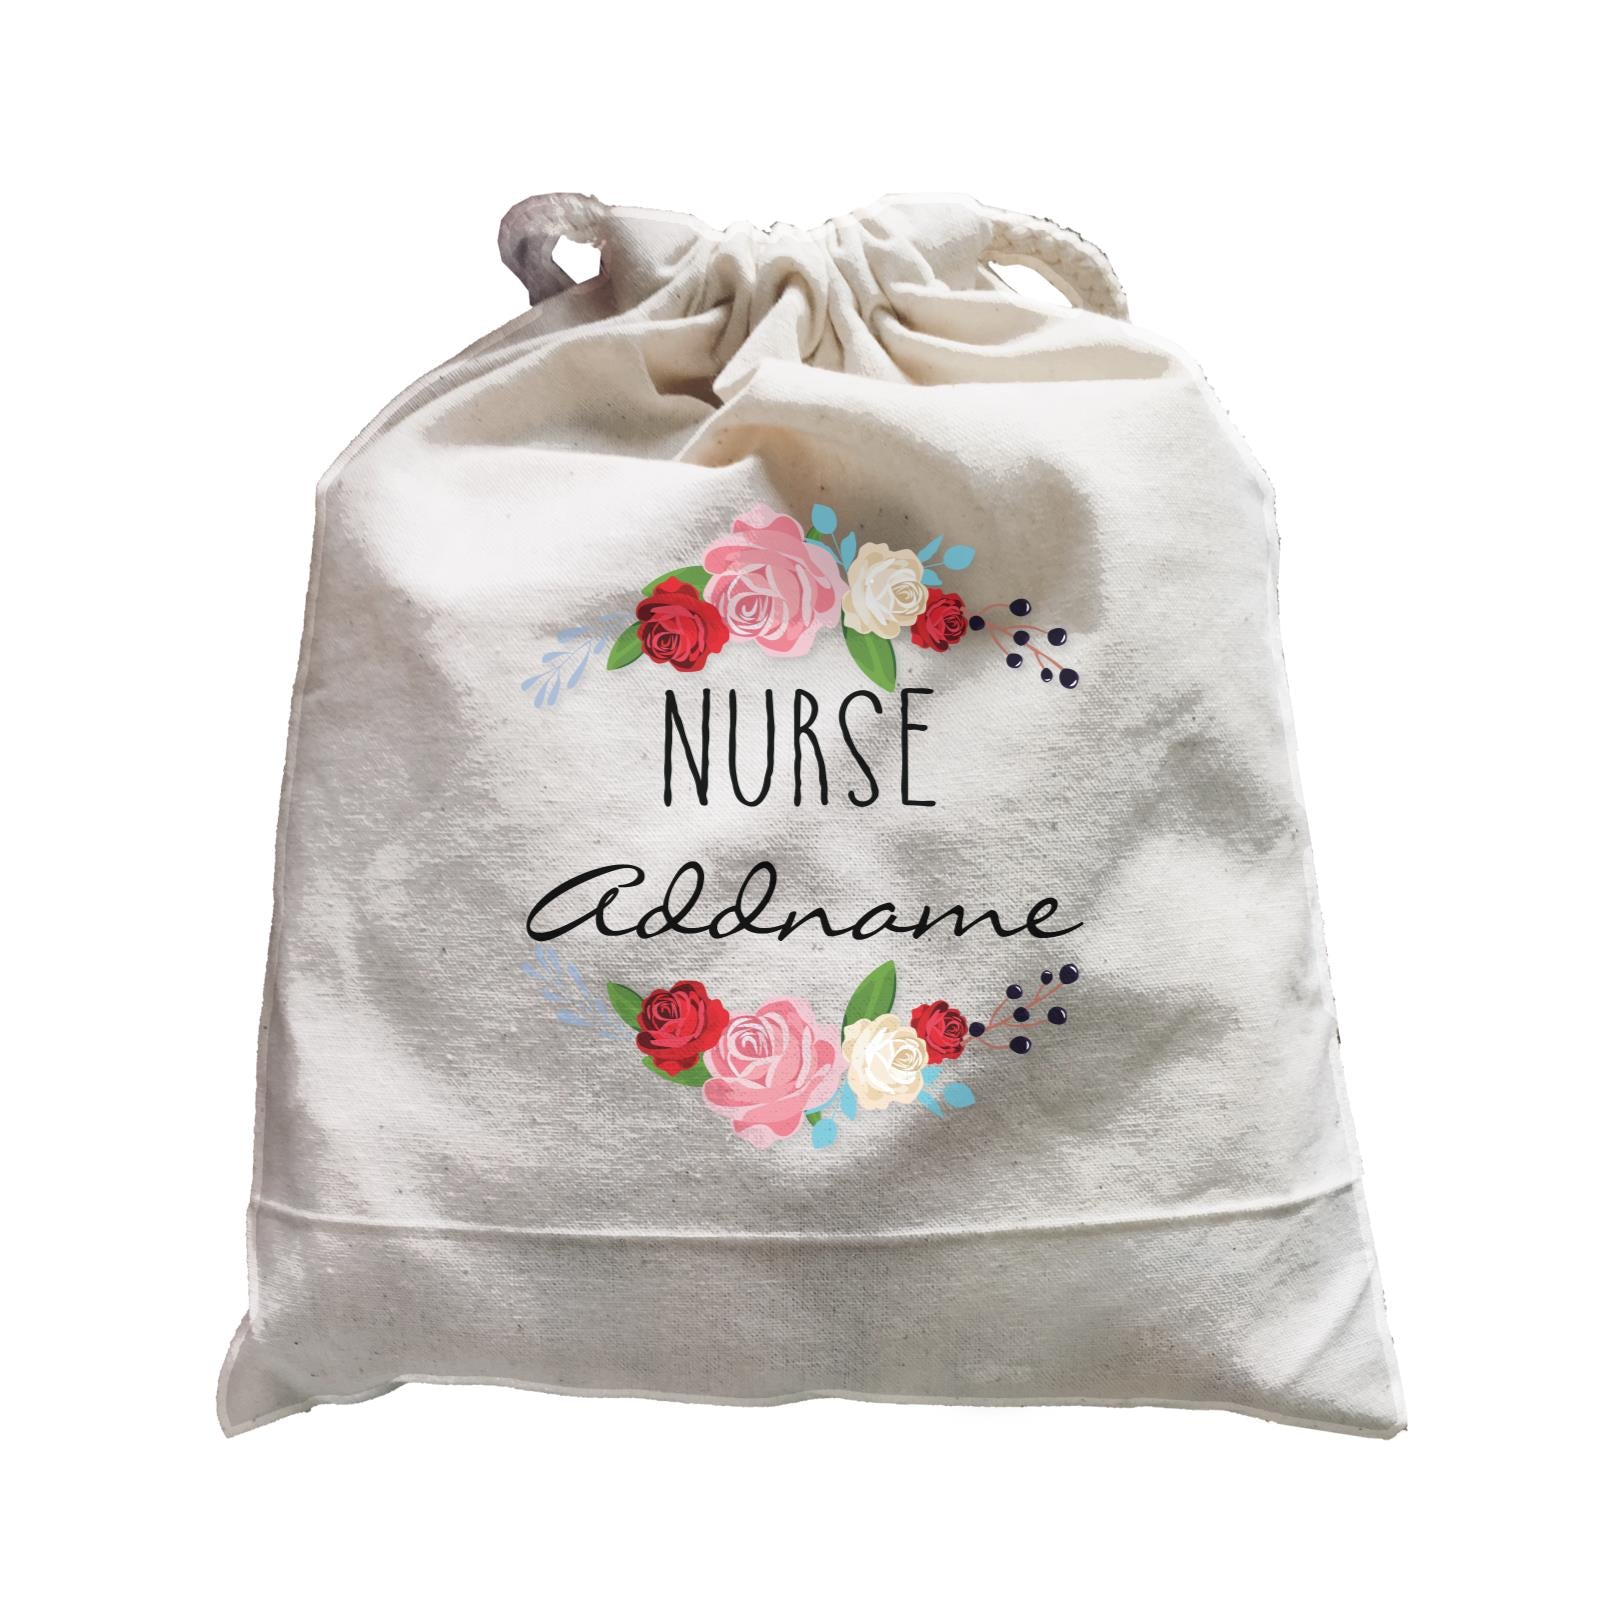 Nurse Quotes Flower Wreath Nurse Addname Satchel